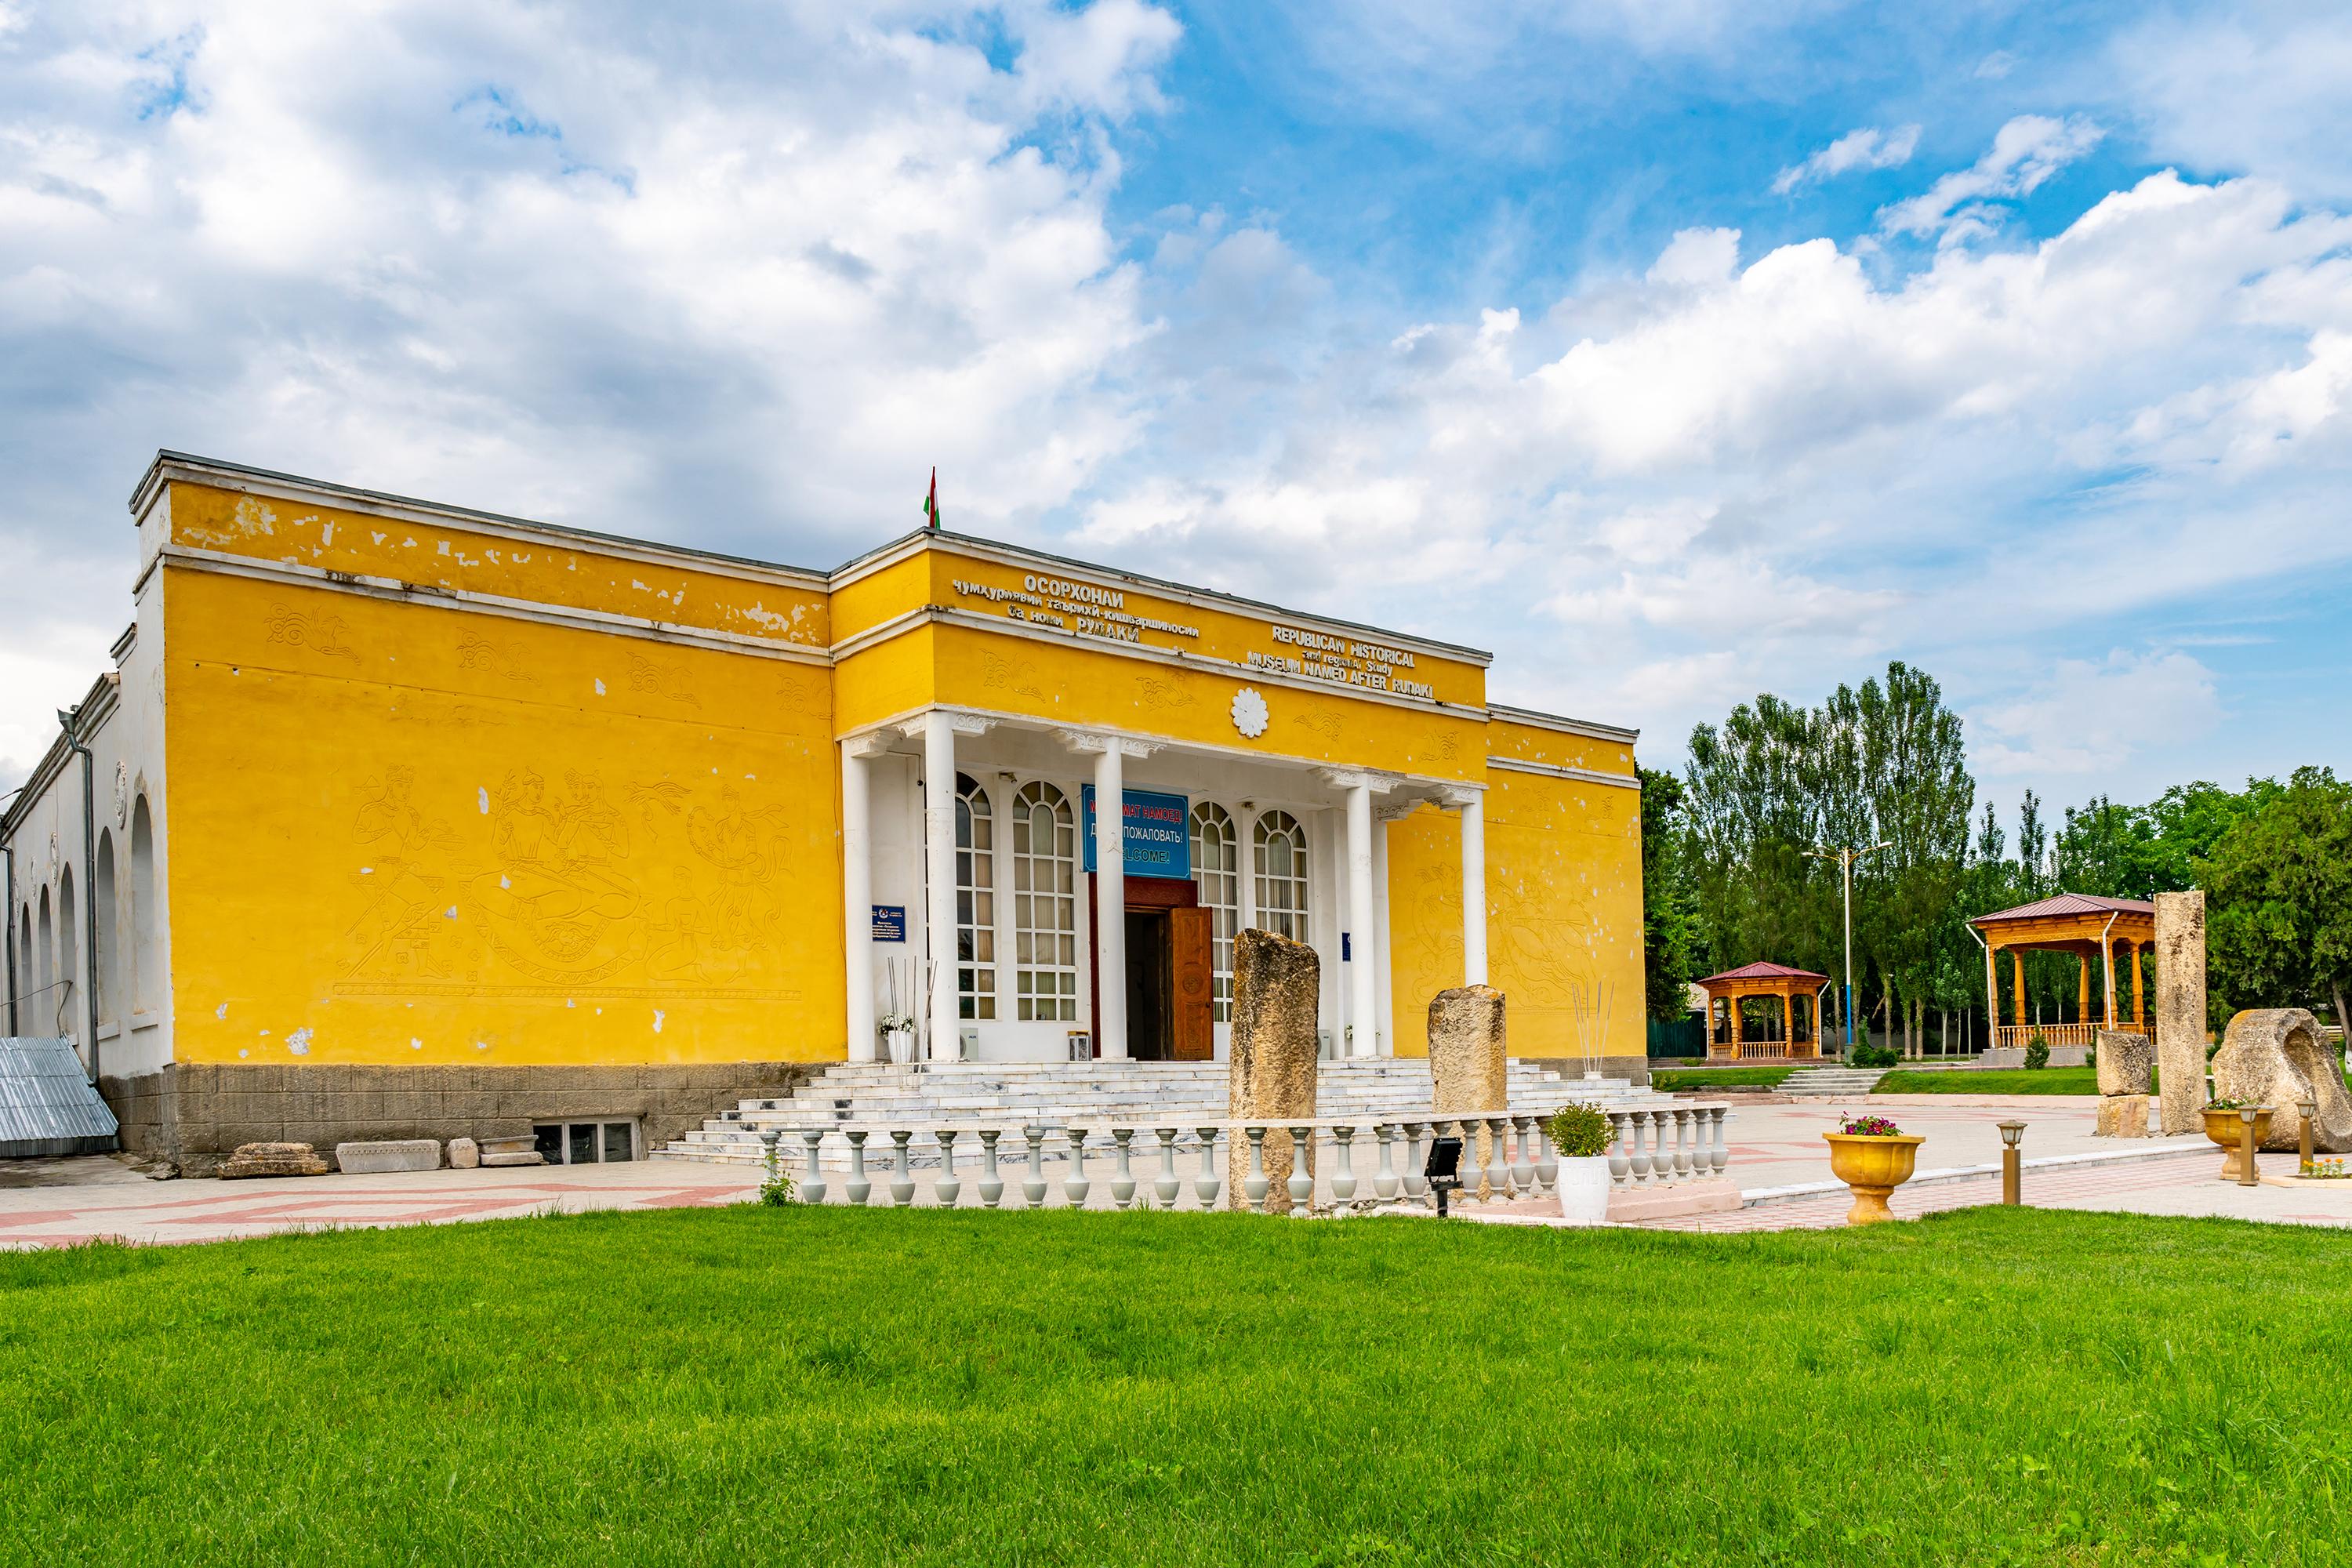 Architecture of the Rudaki Museum - Photo by AlexelA / Shutterstock.com